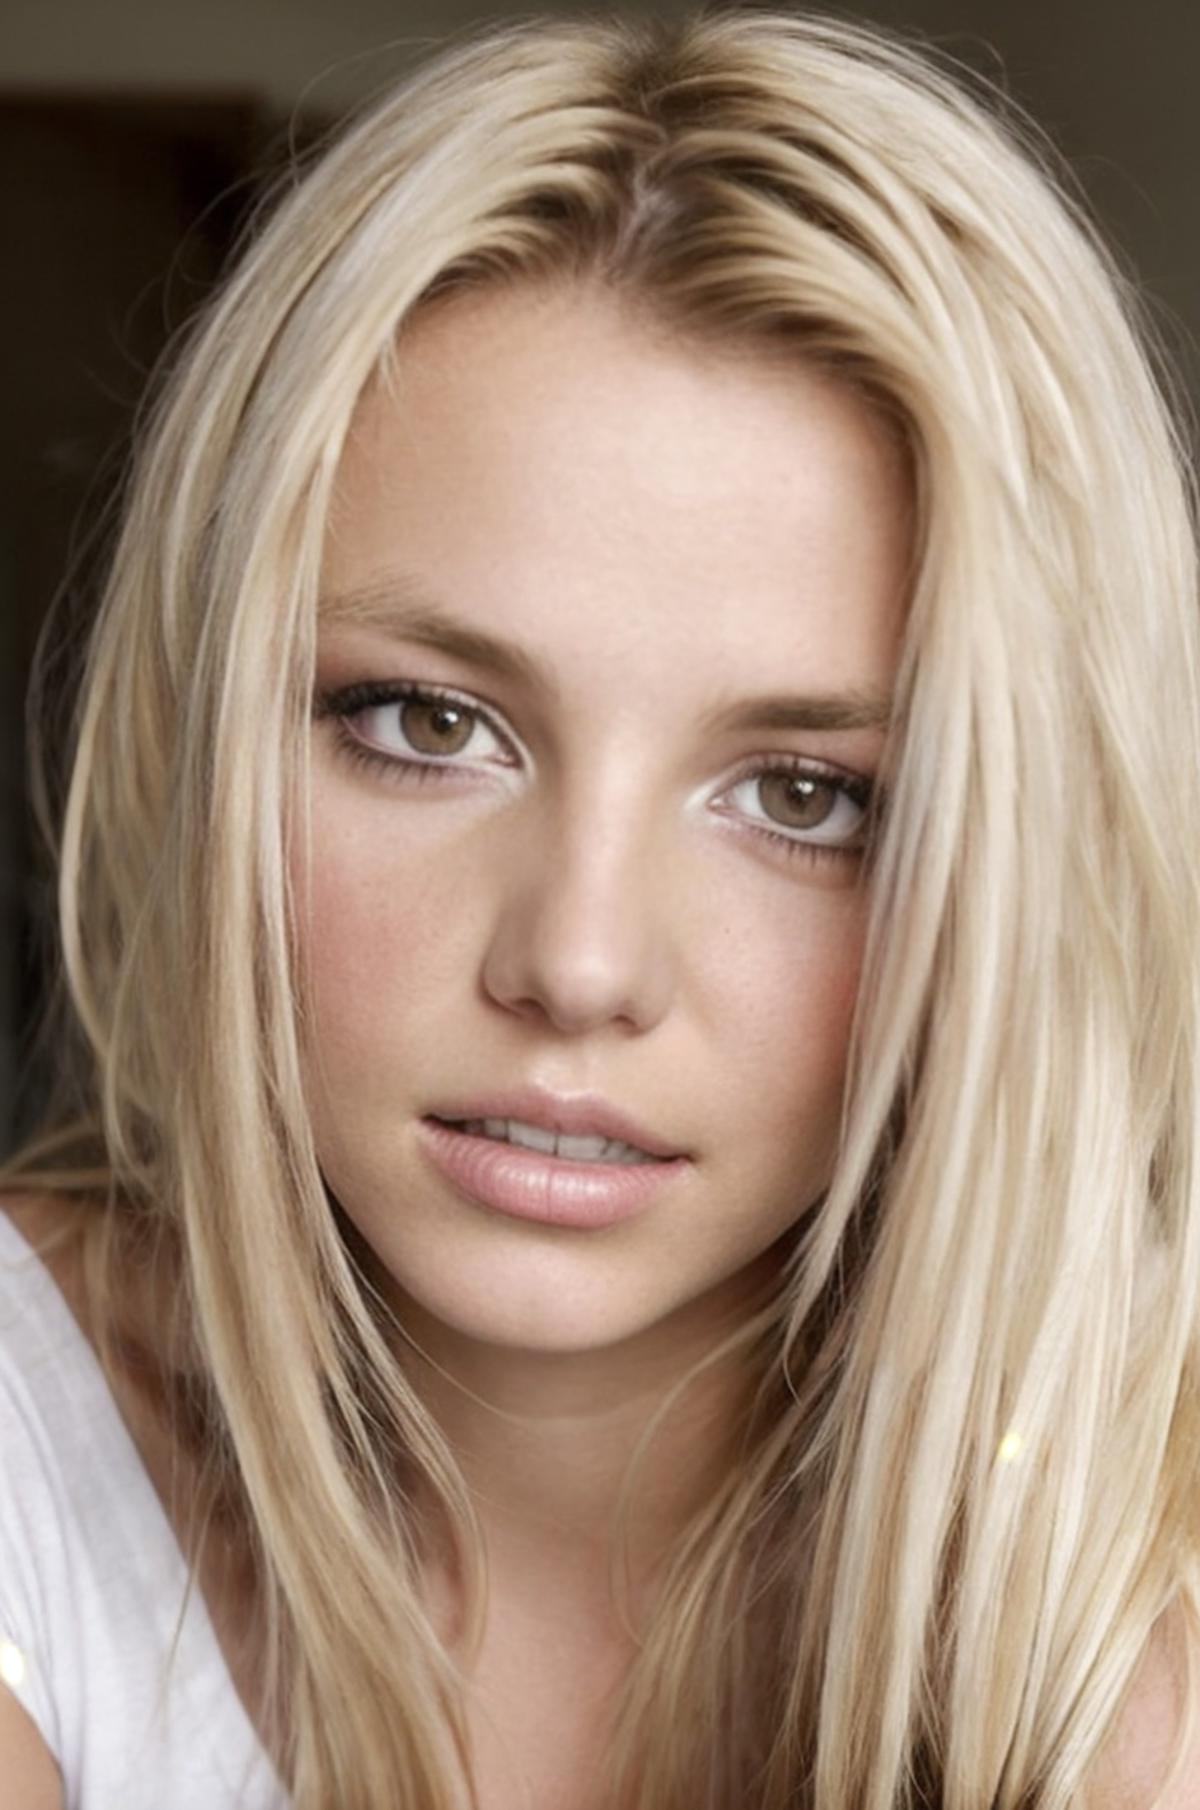 Britney Spears image by sevenof9247